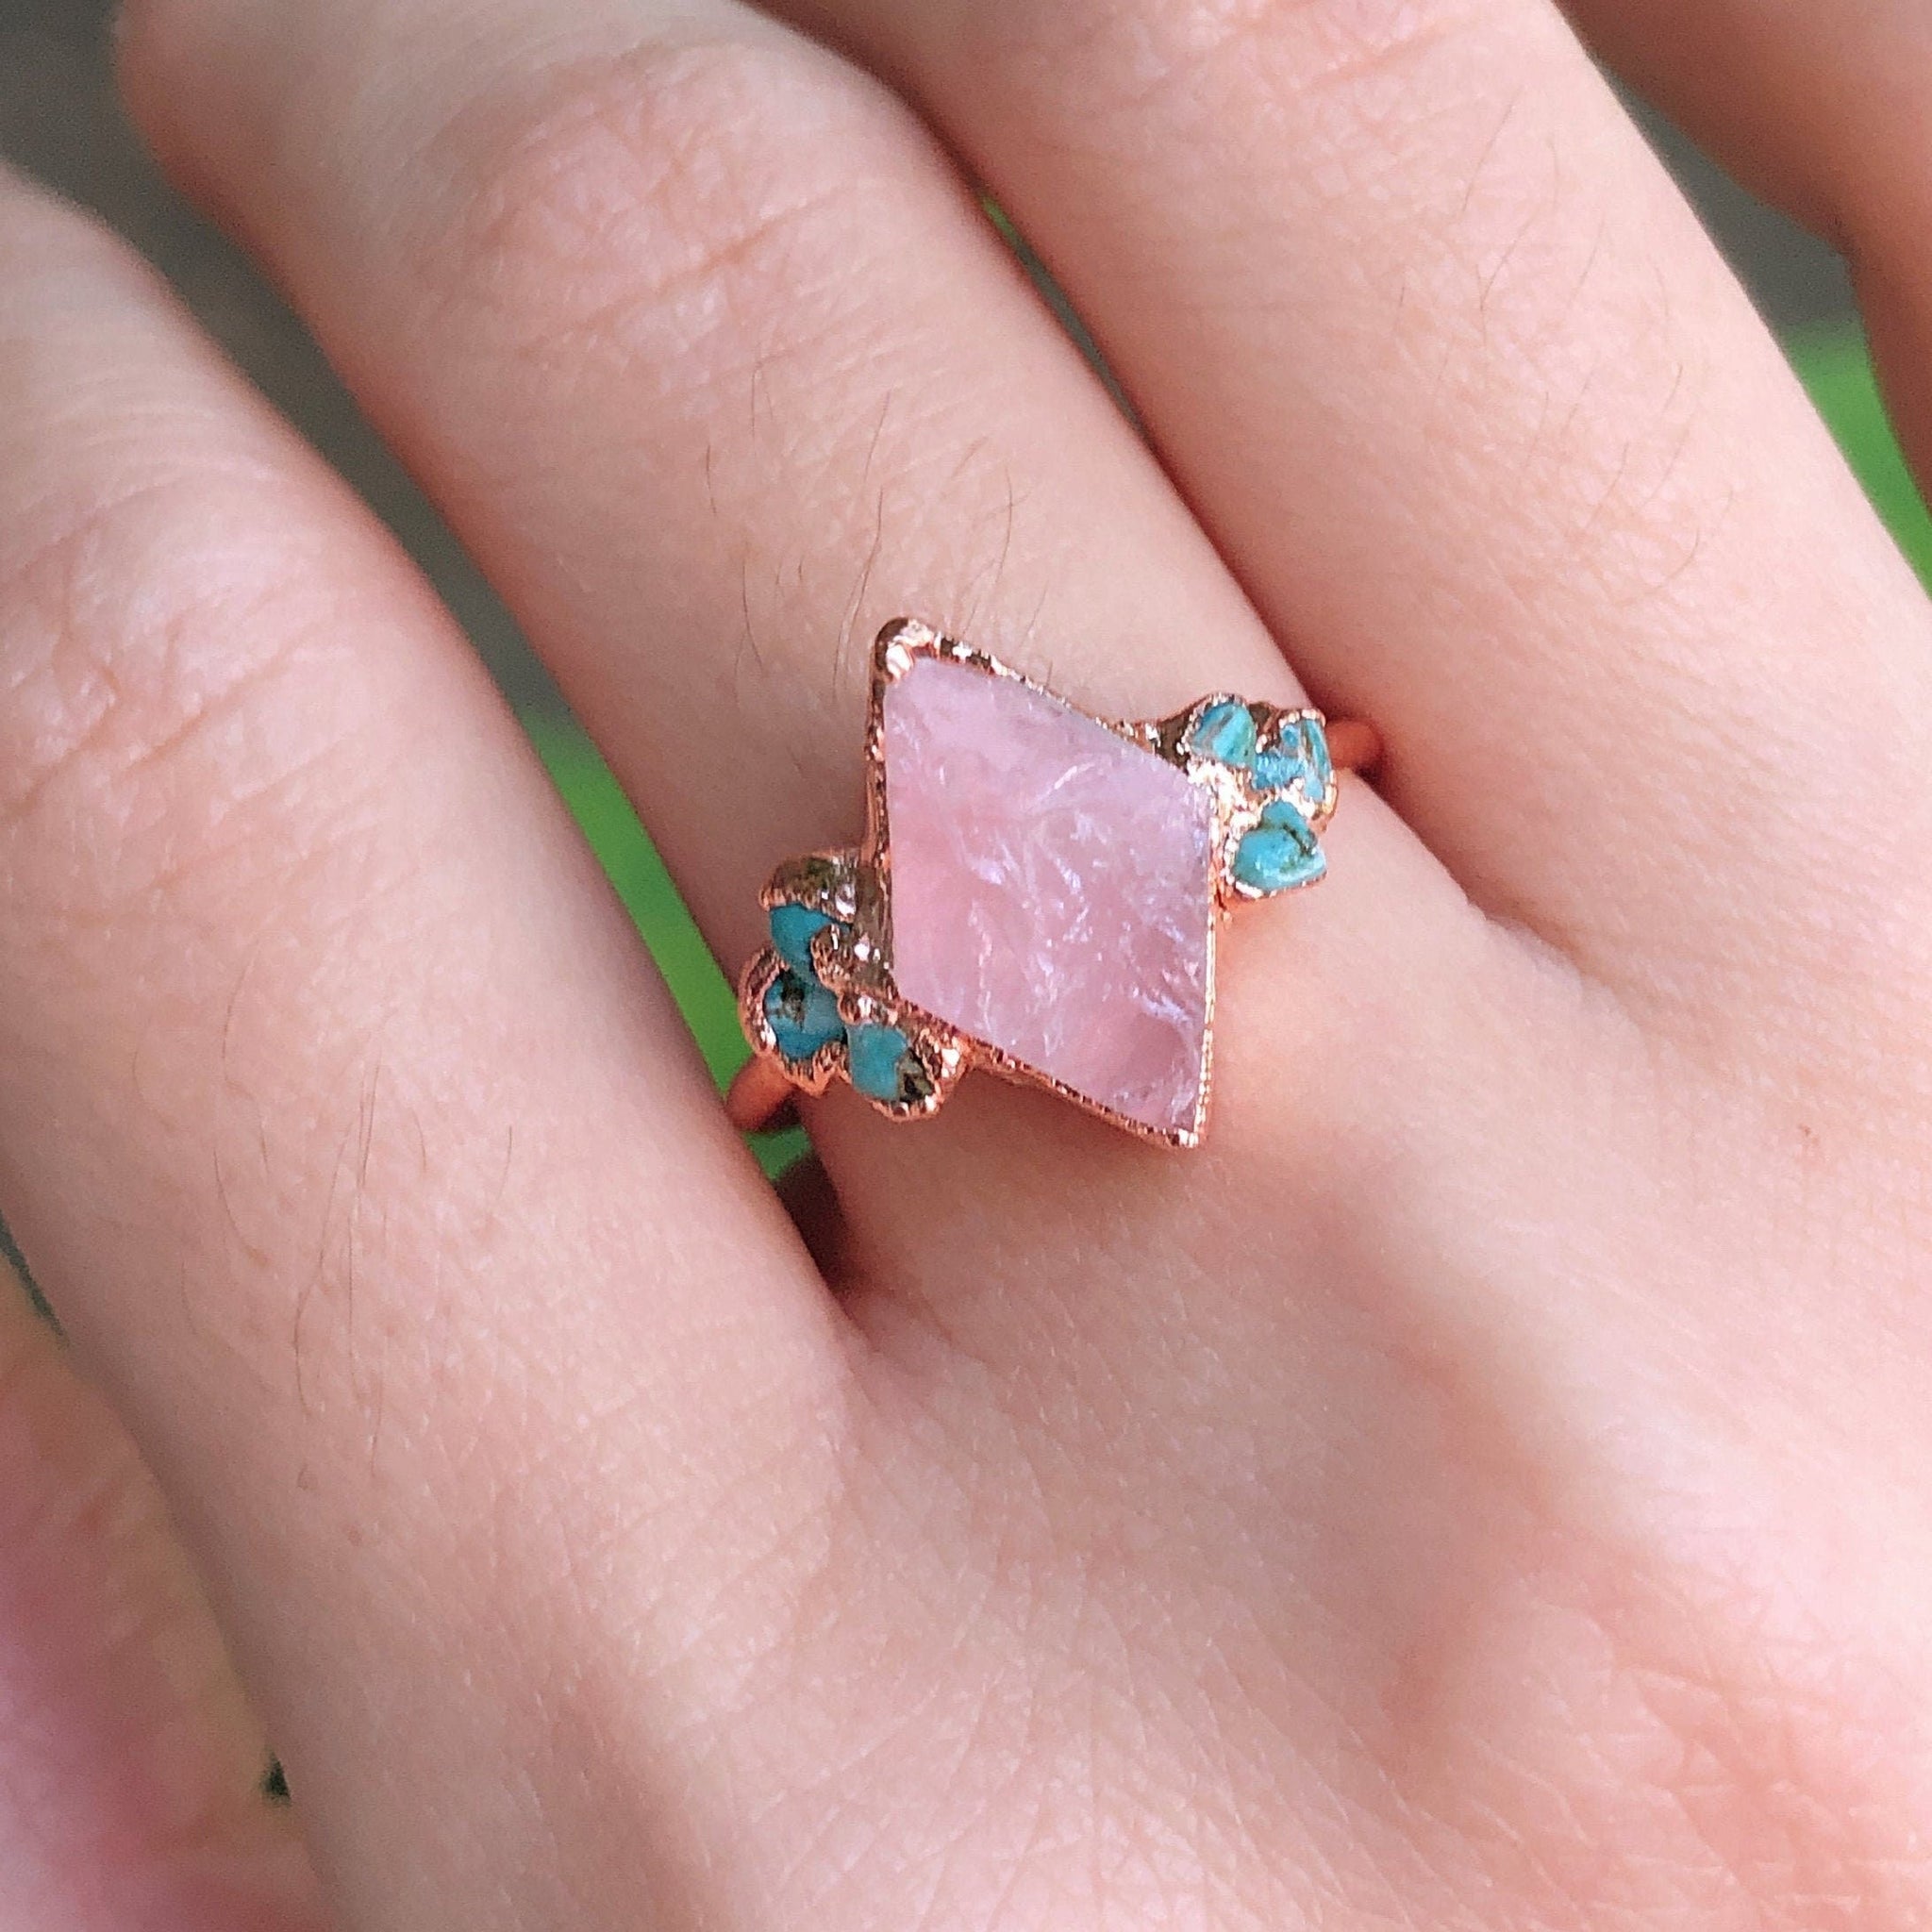 Opal Engagement Ring Stones - International Gem Society | Engagement rings  opal, Stone engagement rings, Opal crystal